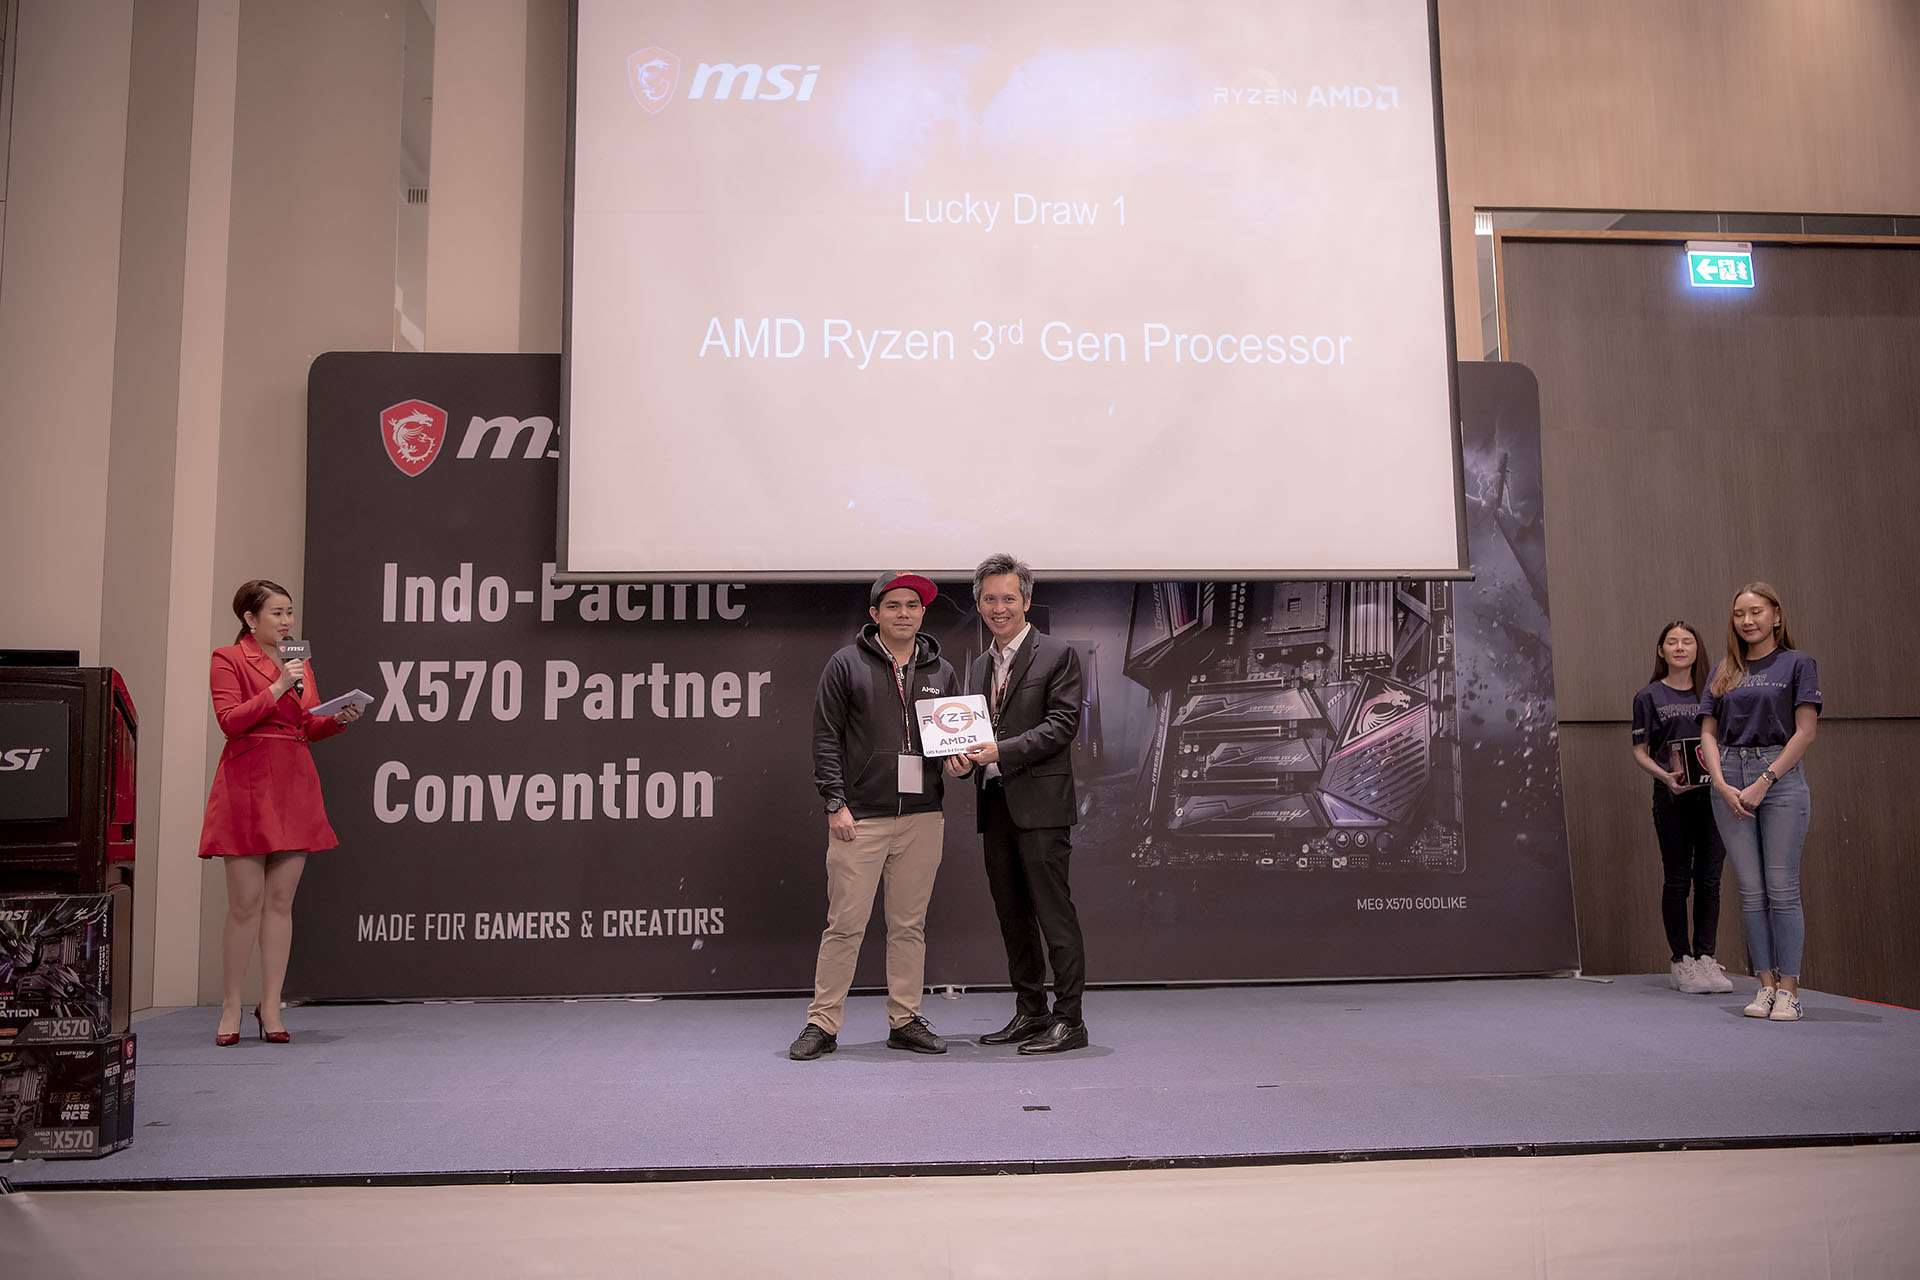 dsc 4965 บรรยากาศงาน MSI Indo Pacific X570 Partner Convention พบการเปิดตัวเมนบอร์ด X570 รุ่นใหม่ล่าสุดจากทาง MSI ต้อนรับการมาของซีพียู AMD RYZEN 3000ซีรี่ย์ 